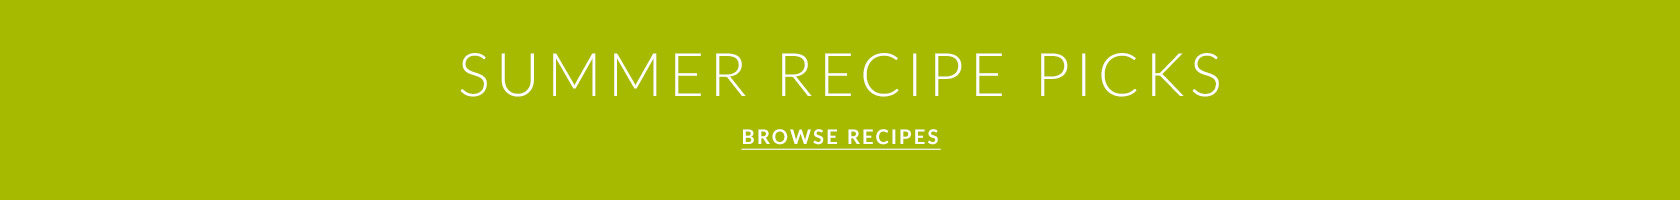 Summer Recipe Picks, browse recipes.